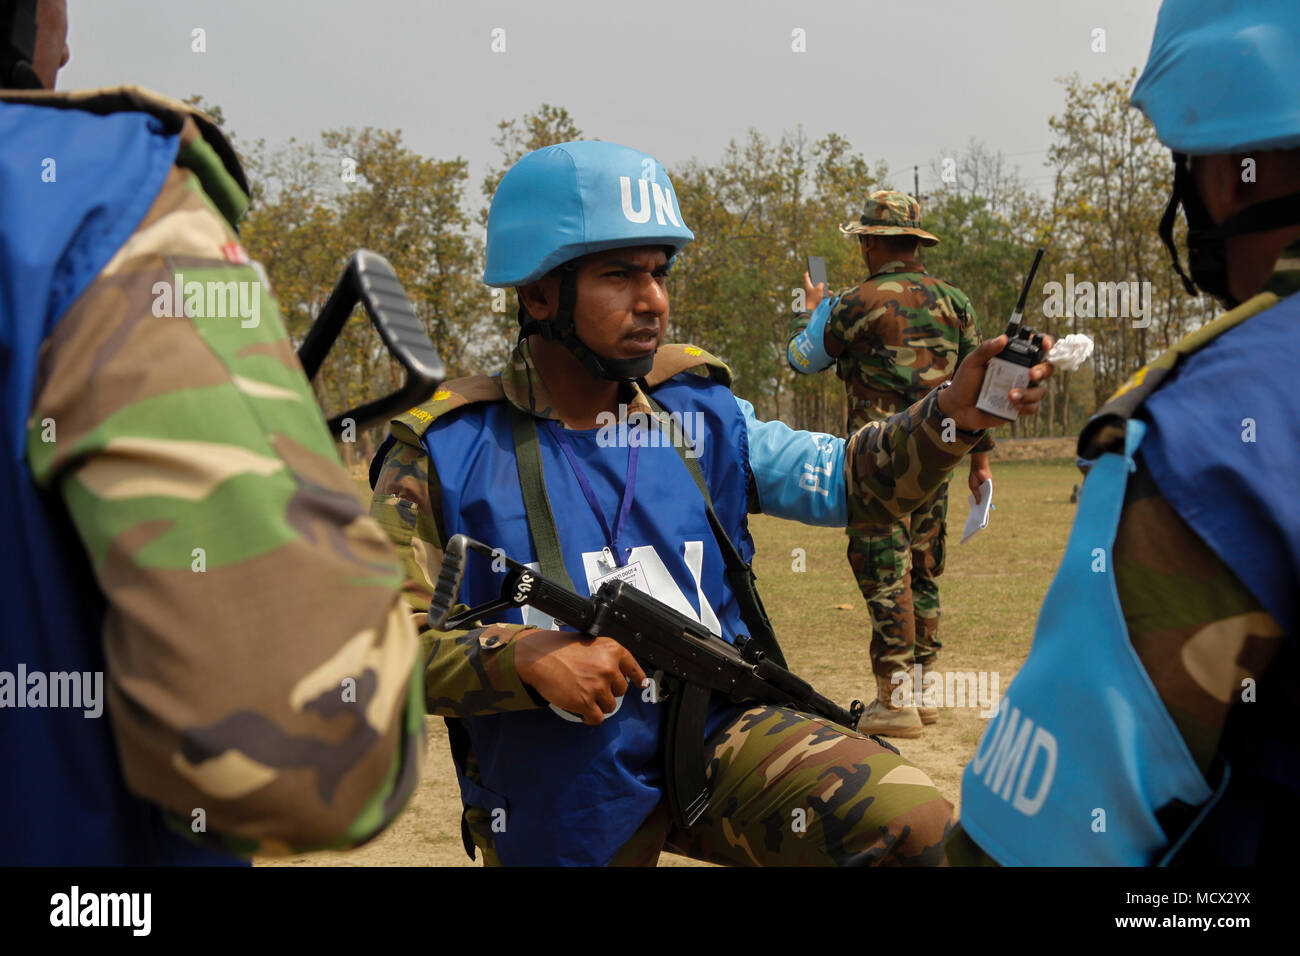 UN Peacekeeping - Better World Campaign